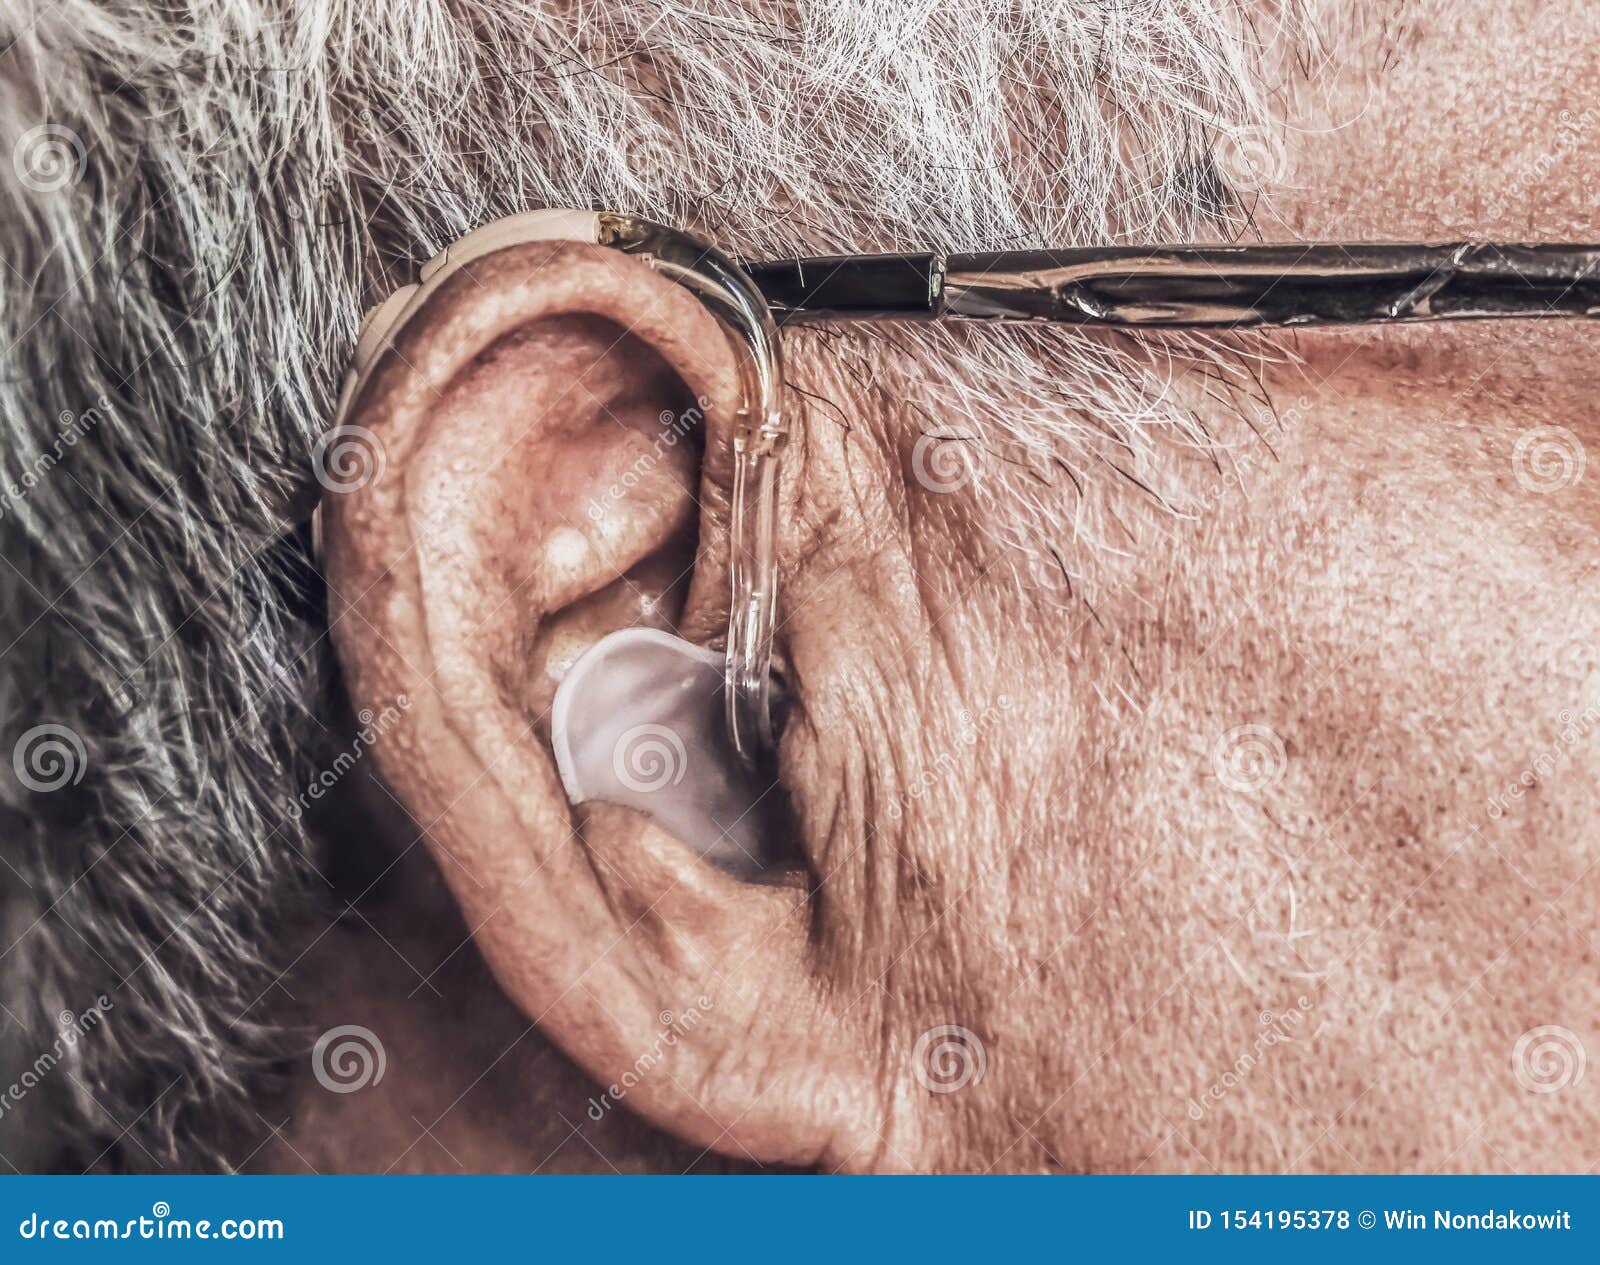 hearing aid